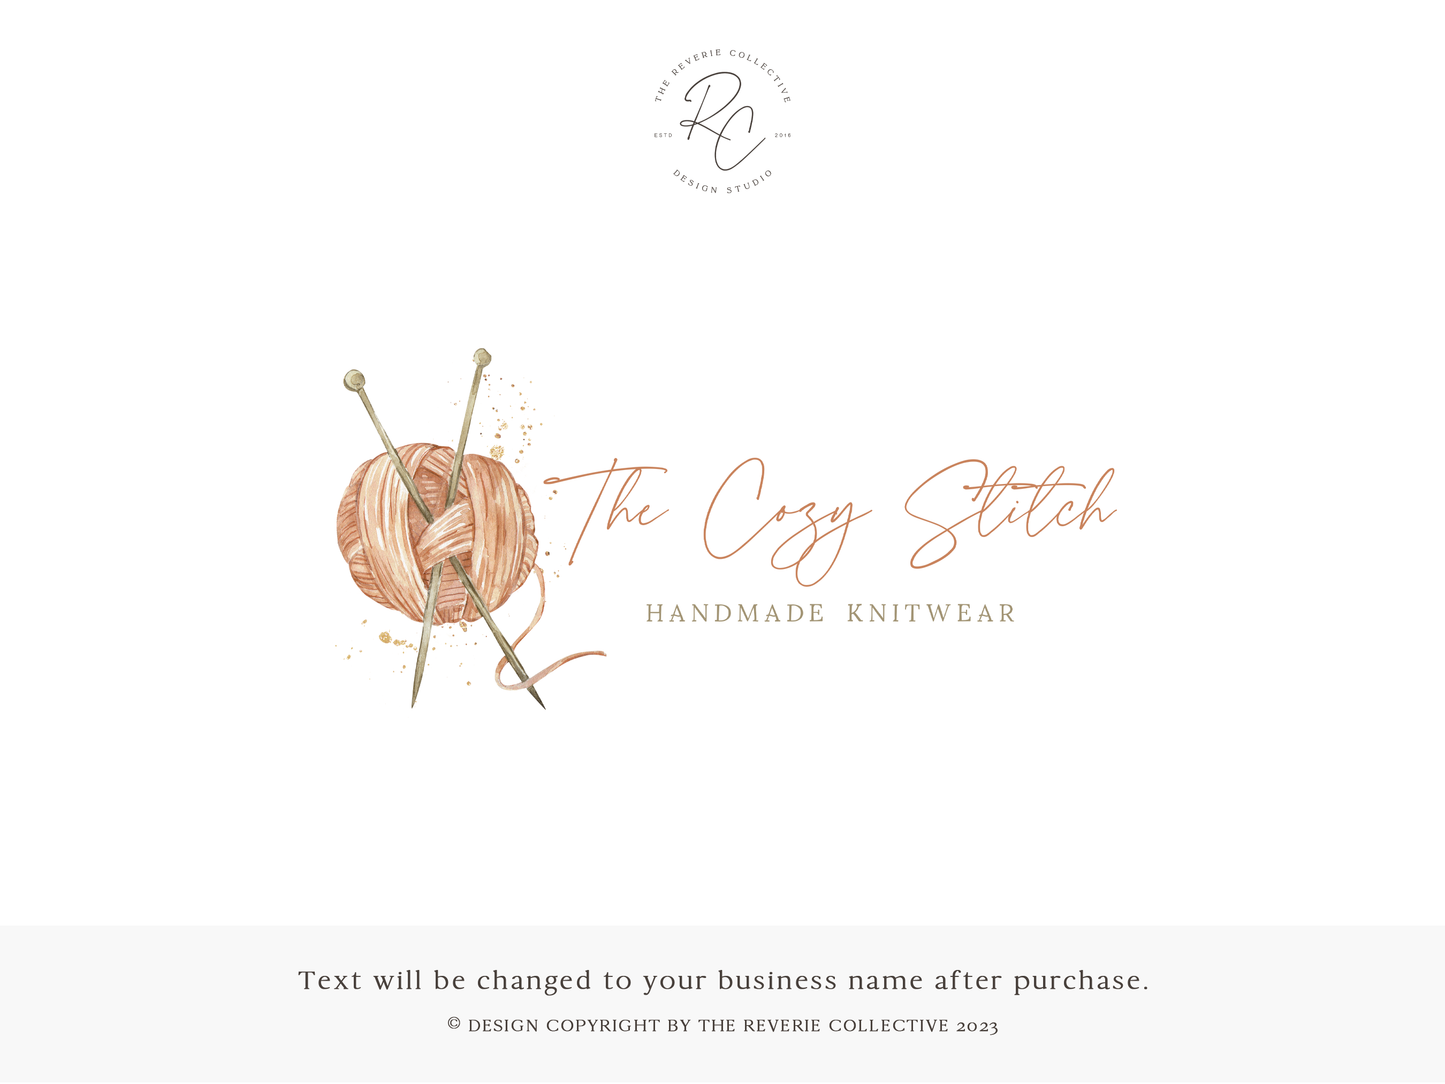 The Cozy Stitch | Premade Logo Design | Knit, Yarn Ball, Knitting Needles, Crochet, Amigurumi